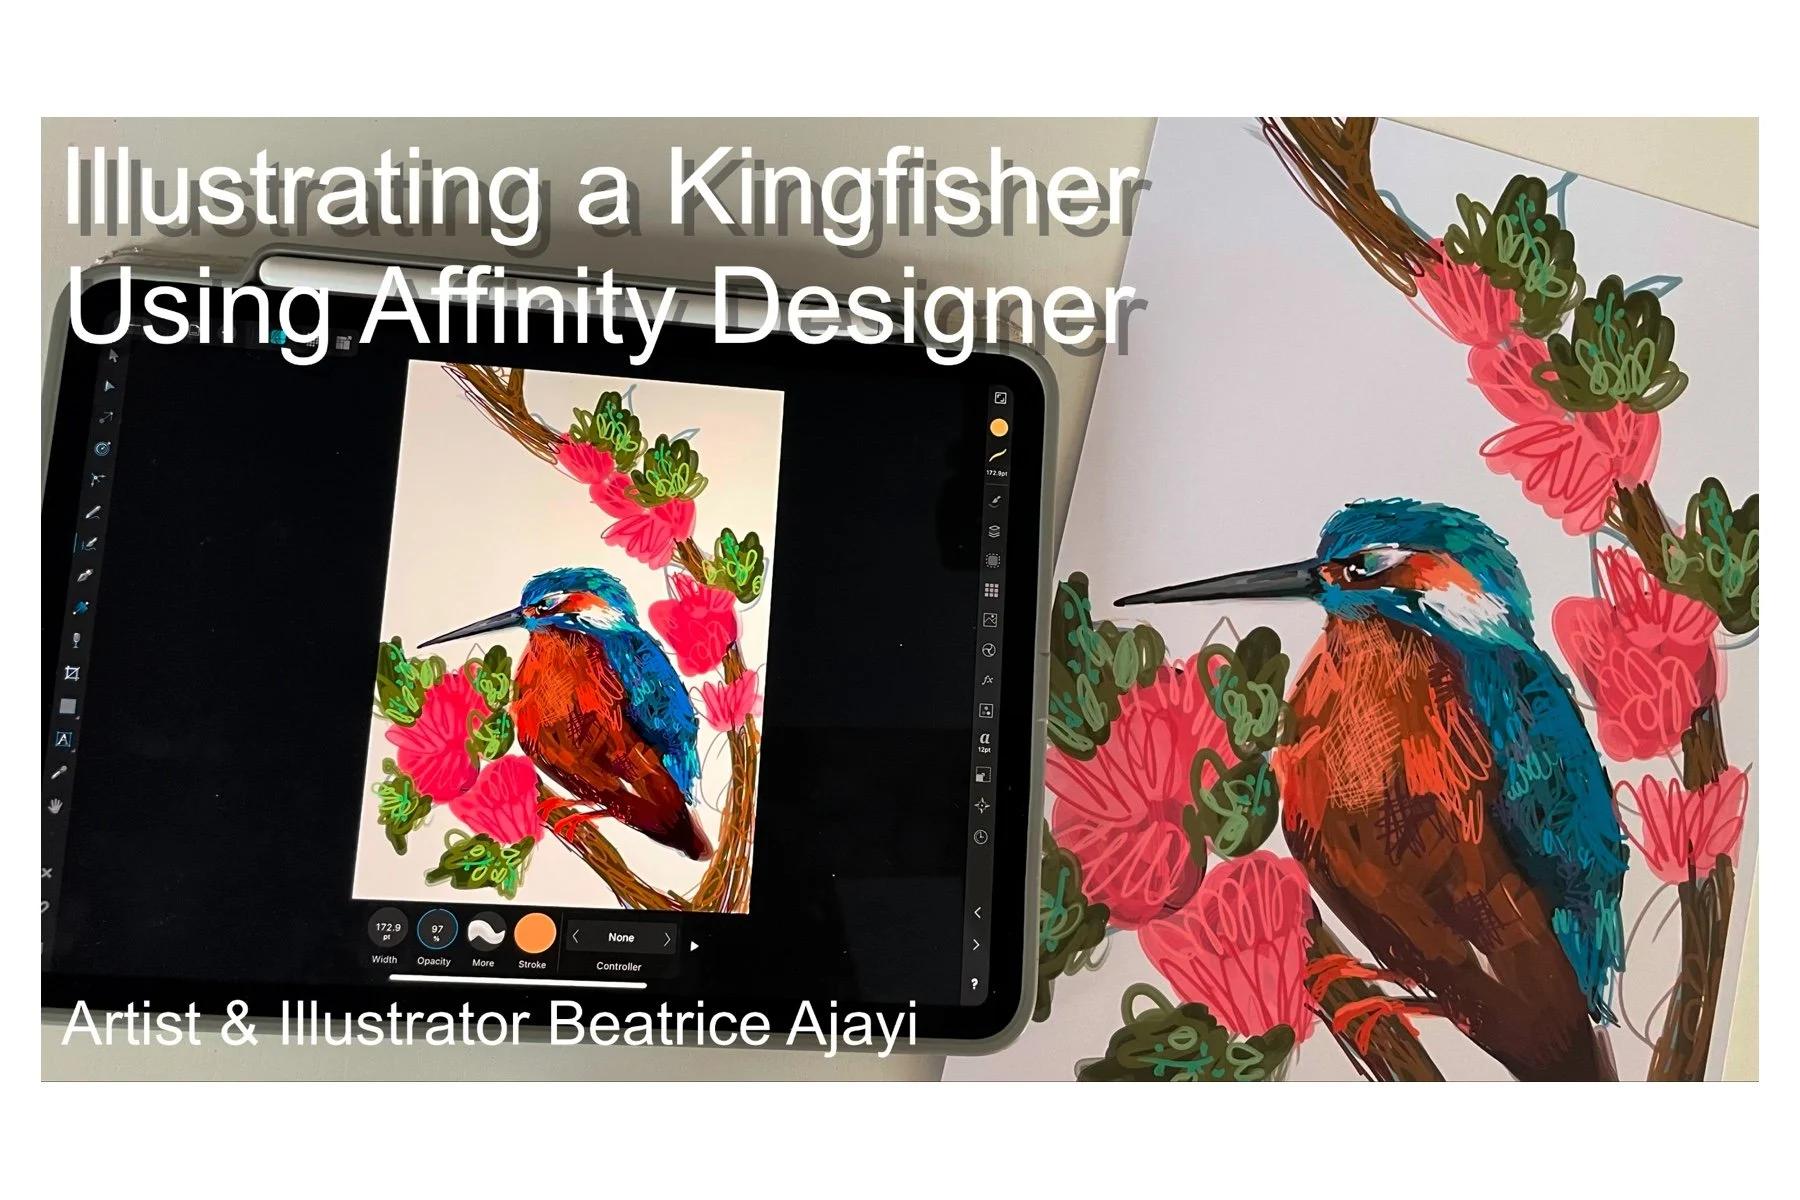 Illustrating a Kingfisher Using Affinity Designer